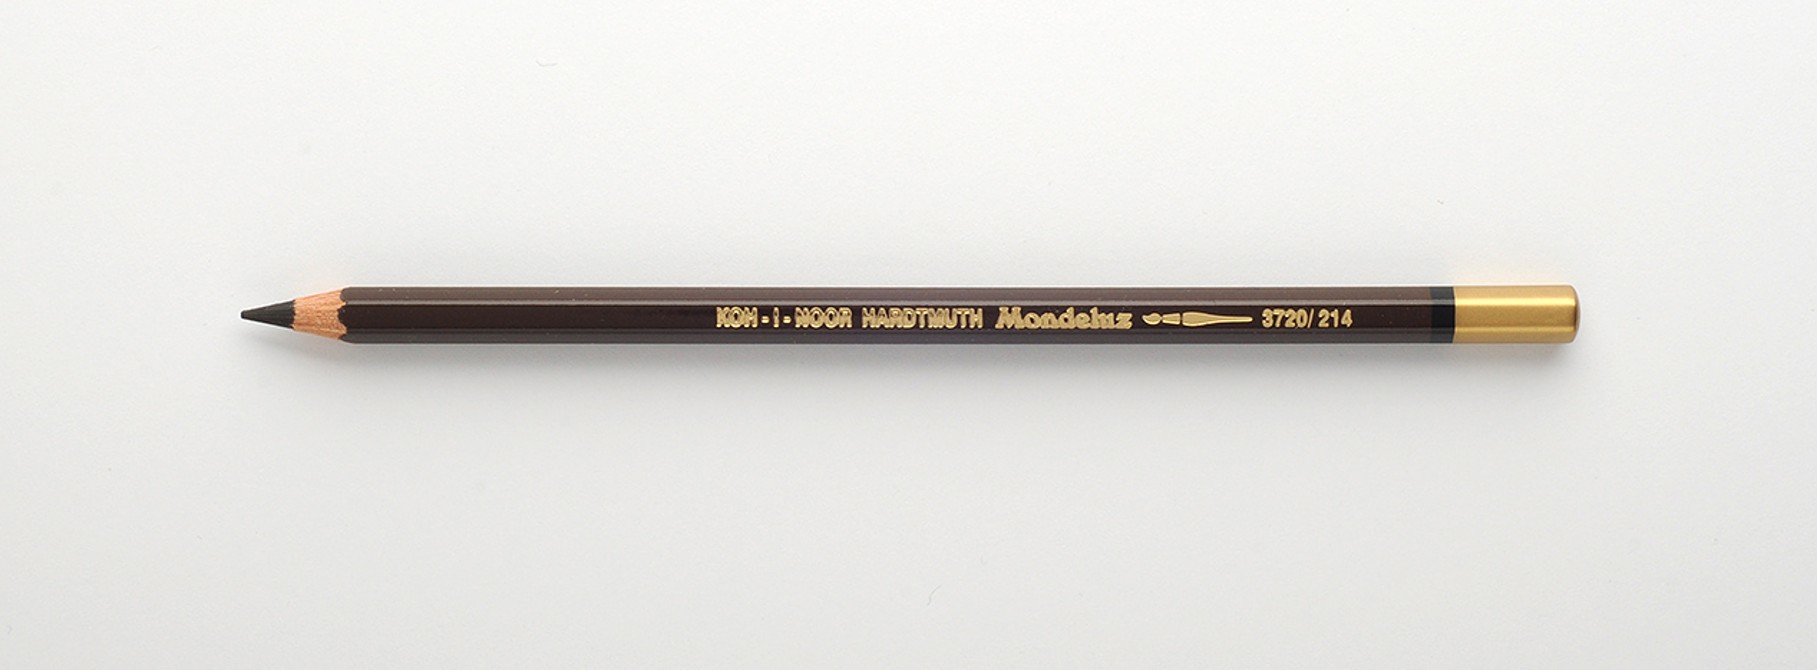 Creion colorat Mondeluz Aquarell KOH-I-NOOR, maron pamant inchis